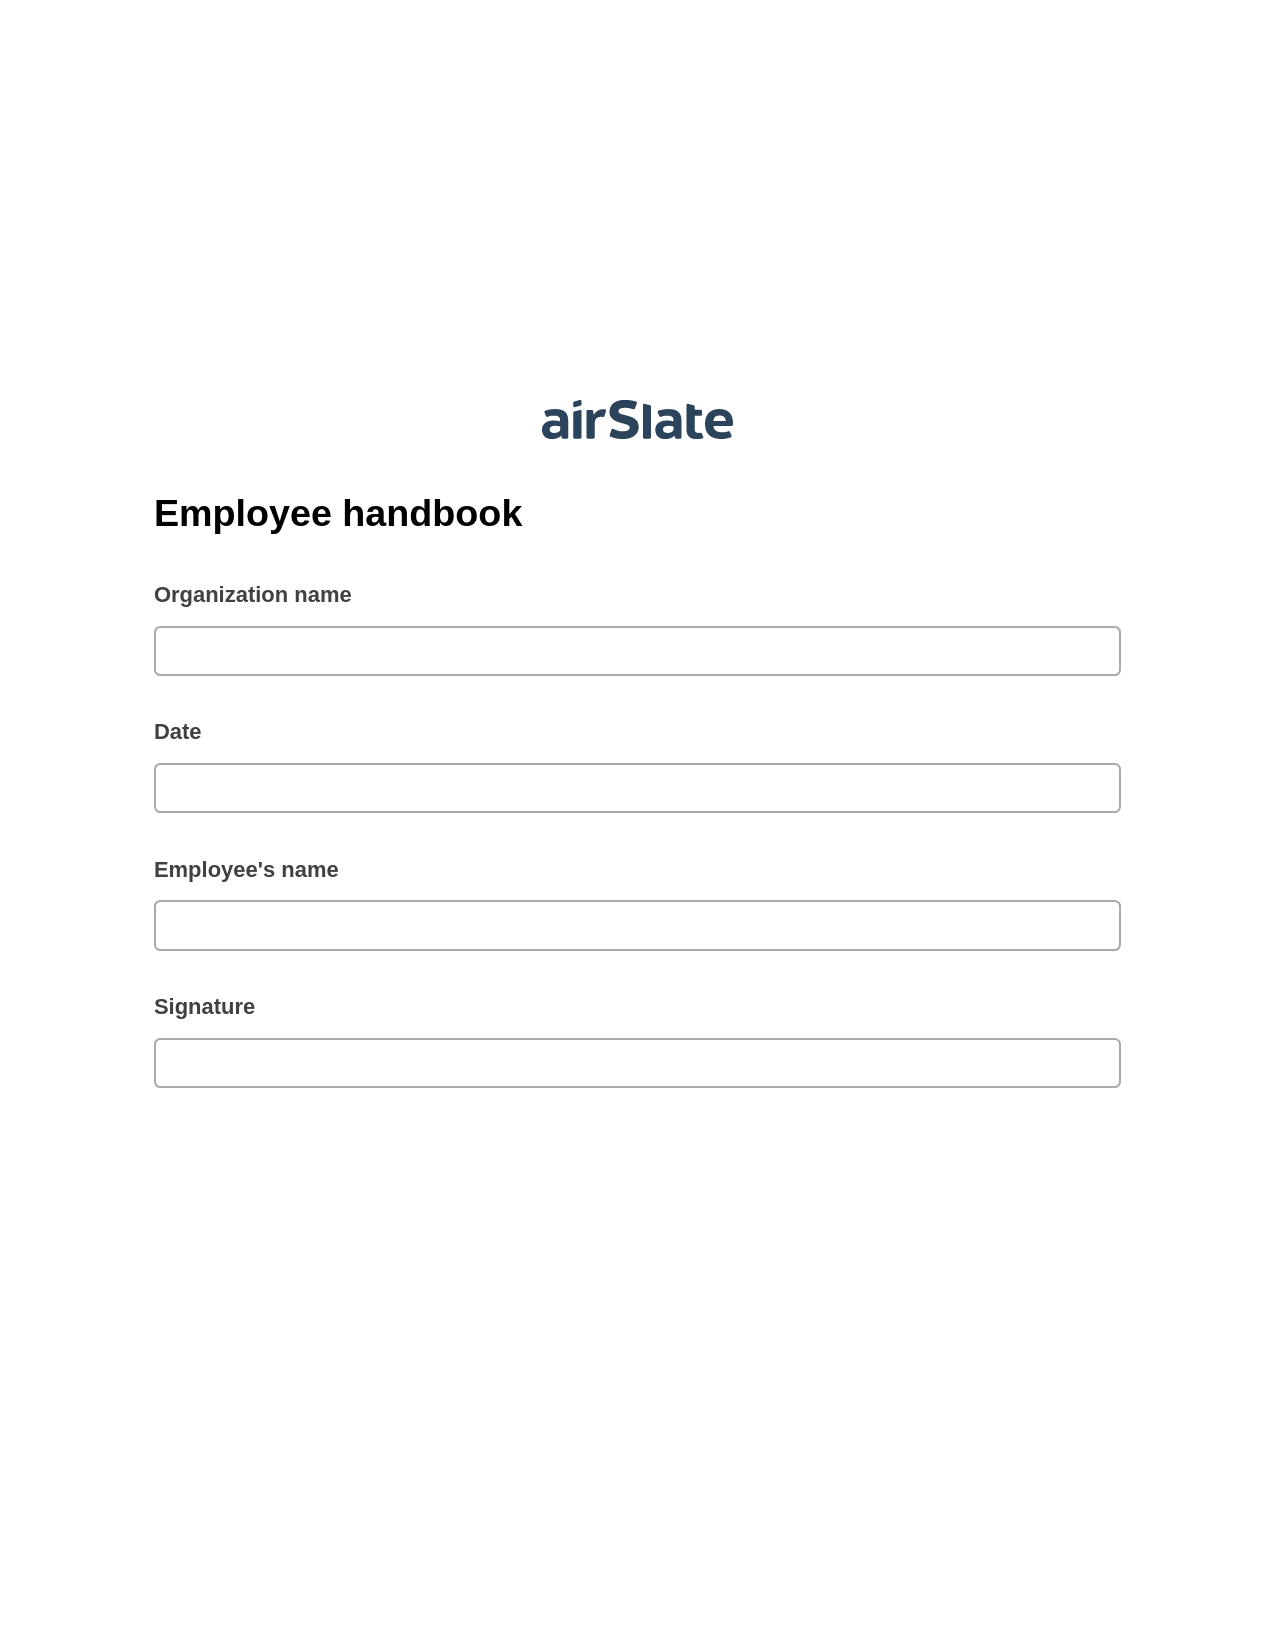 Multirole Employee handbook Pre-fill from NetSuite Records Bot, Google Sheet Two-Way Binding Bot, Box Bot